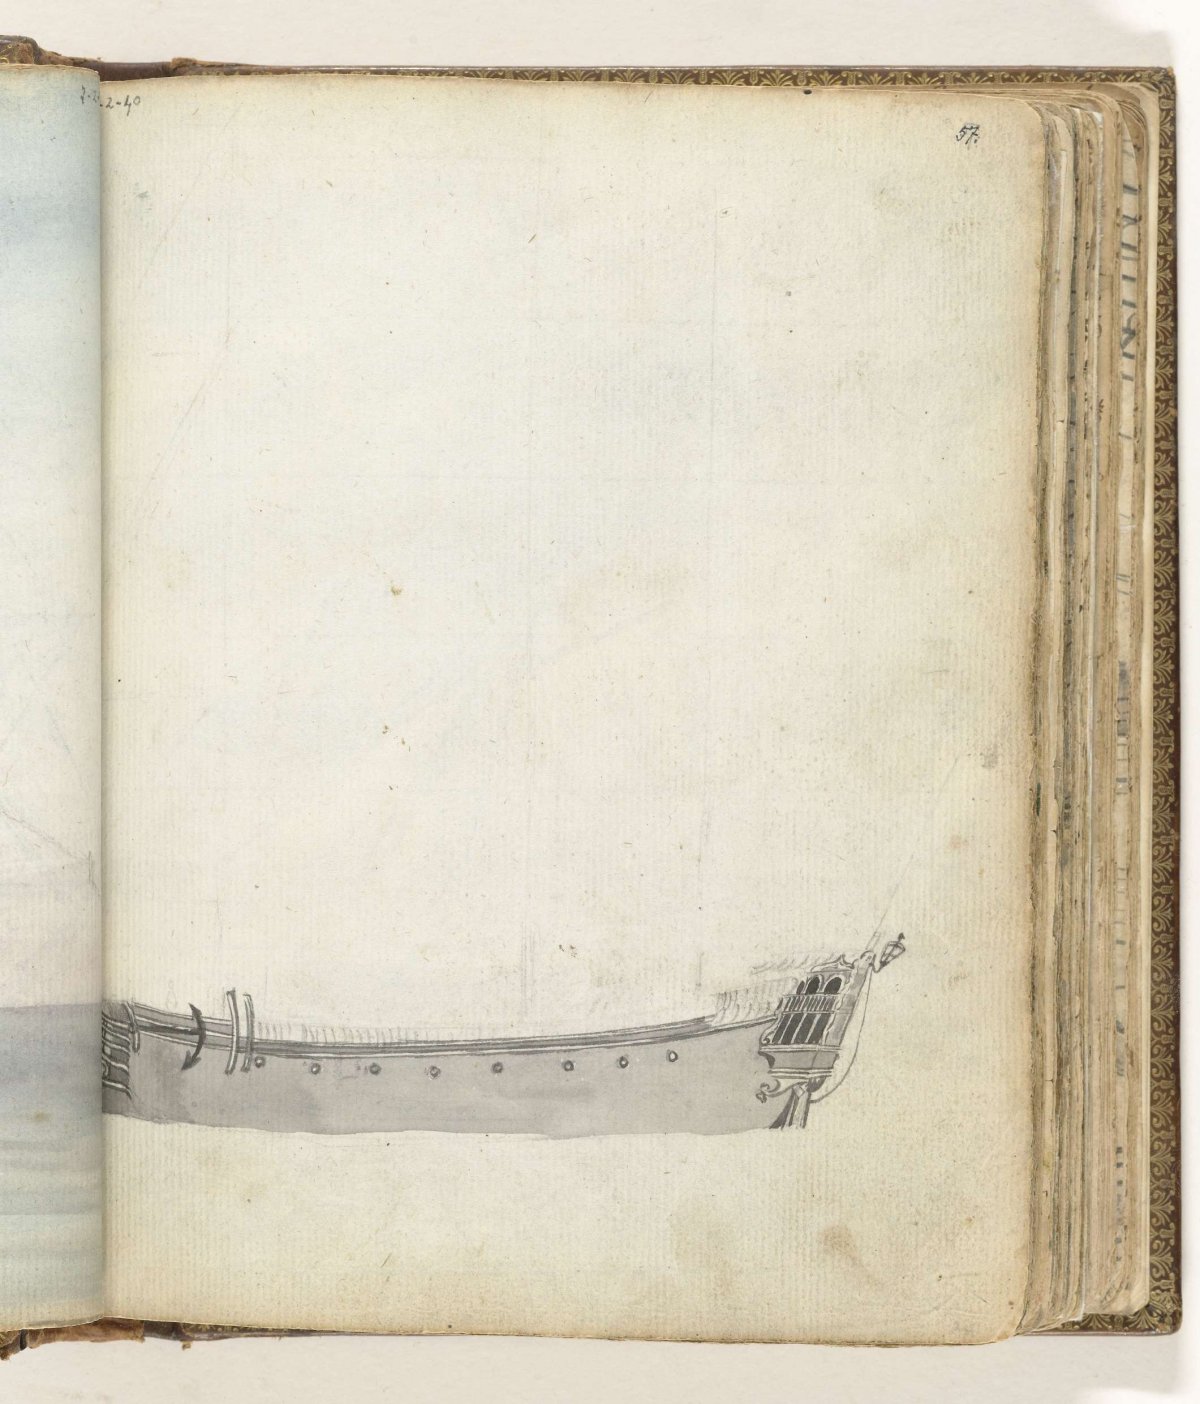 Hull of a ship, Jan Brandes, 1779 - 1787